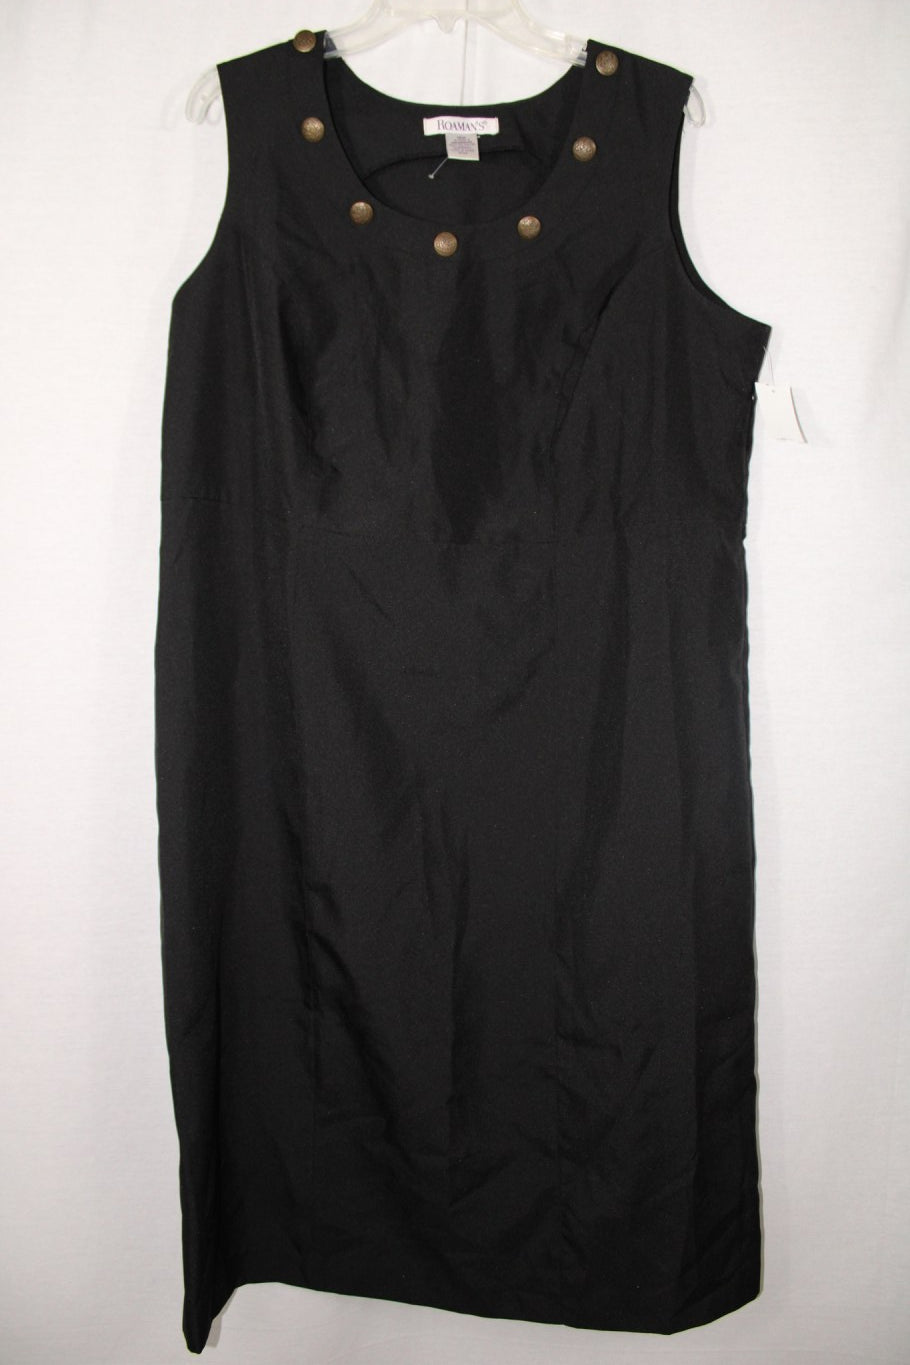 Roaman's Black Polyester Dress | Size 16W